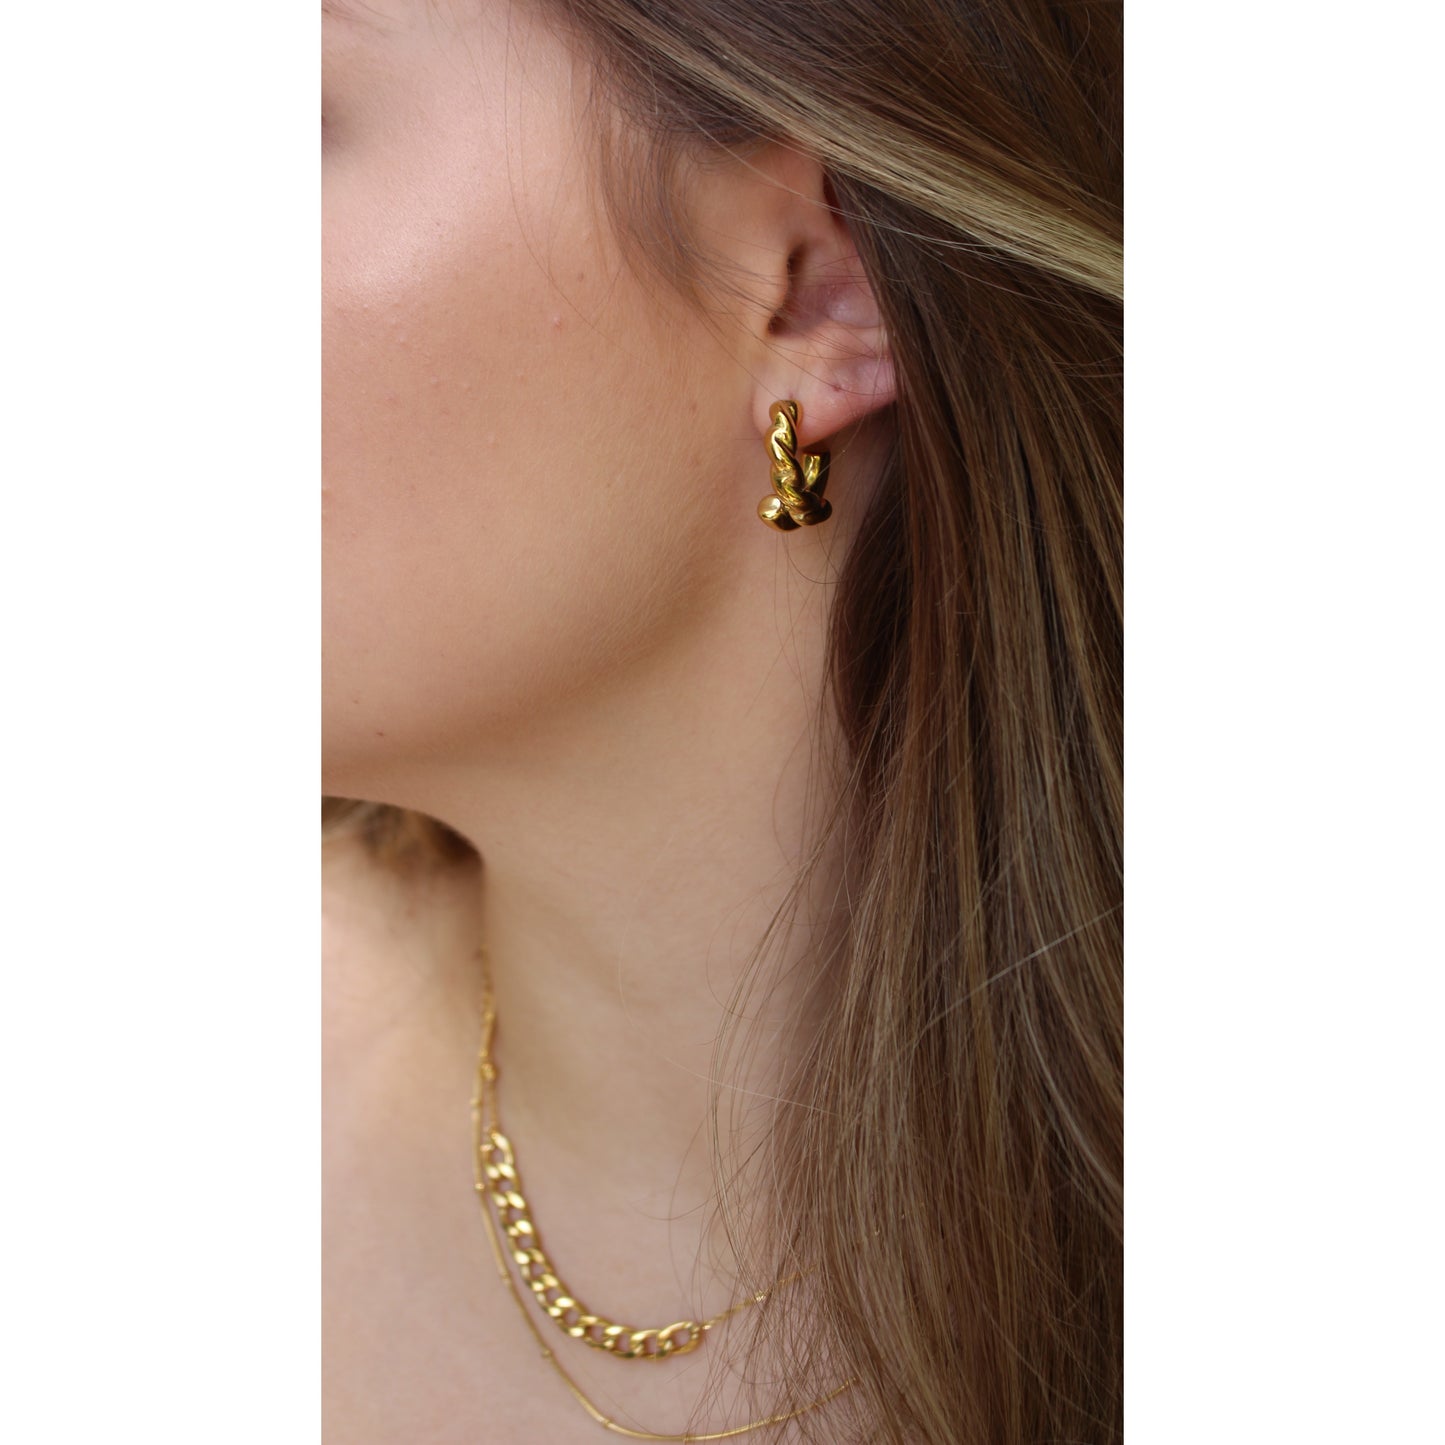 Leyla Ohrringe Yasemen Store Schmuck Accessoires Edelstahl Stainless Steel 14K Vergoldet Gold jewel jewelry earring